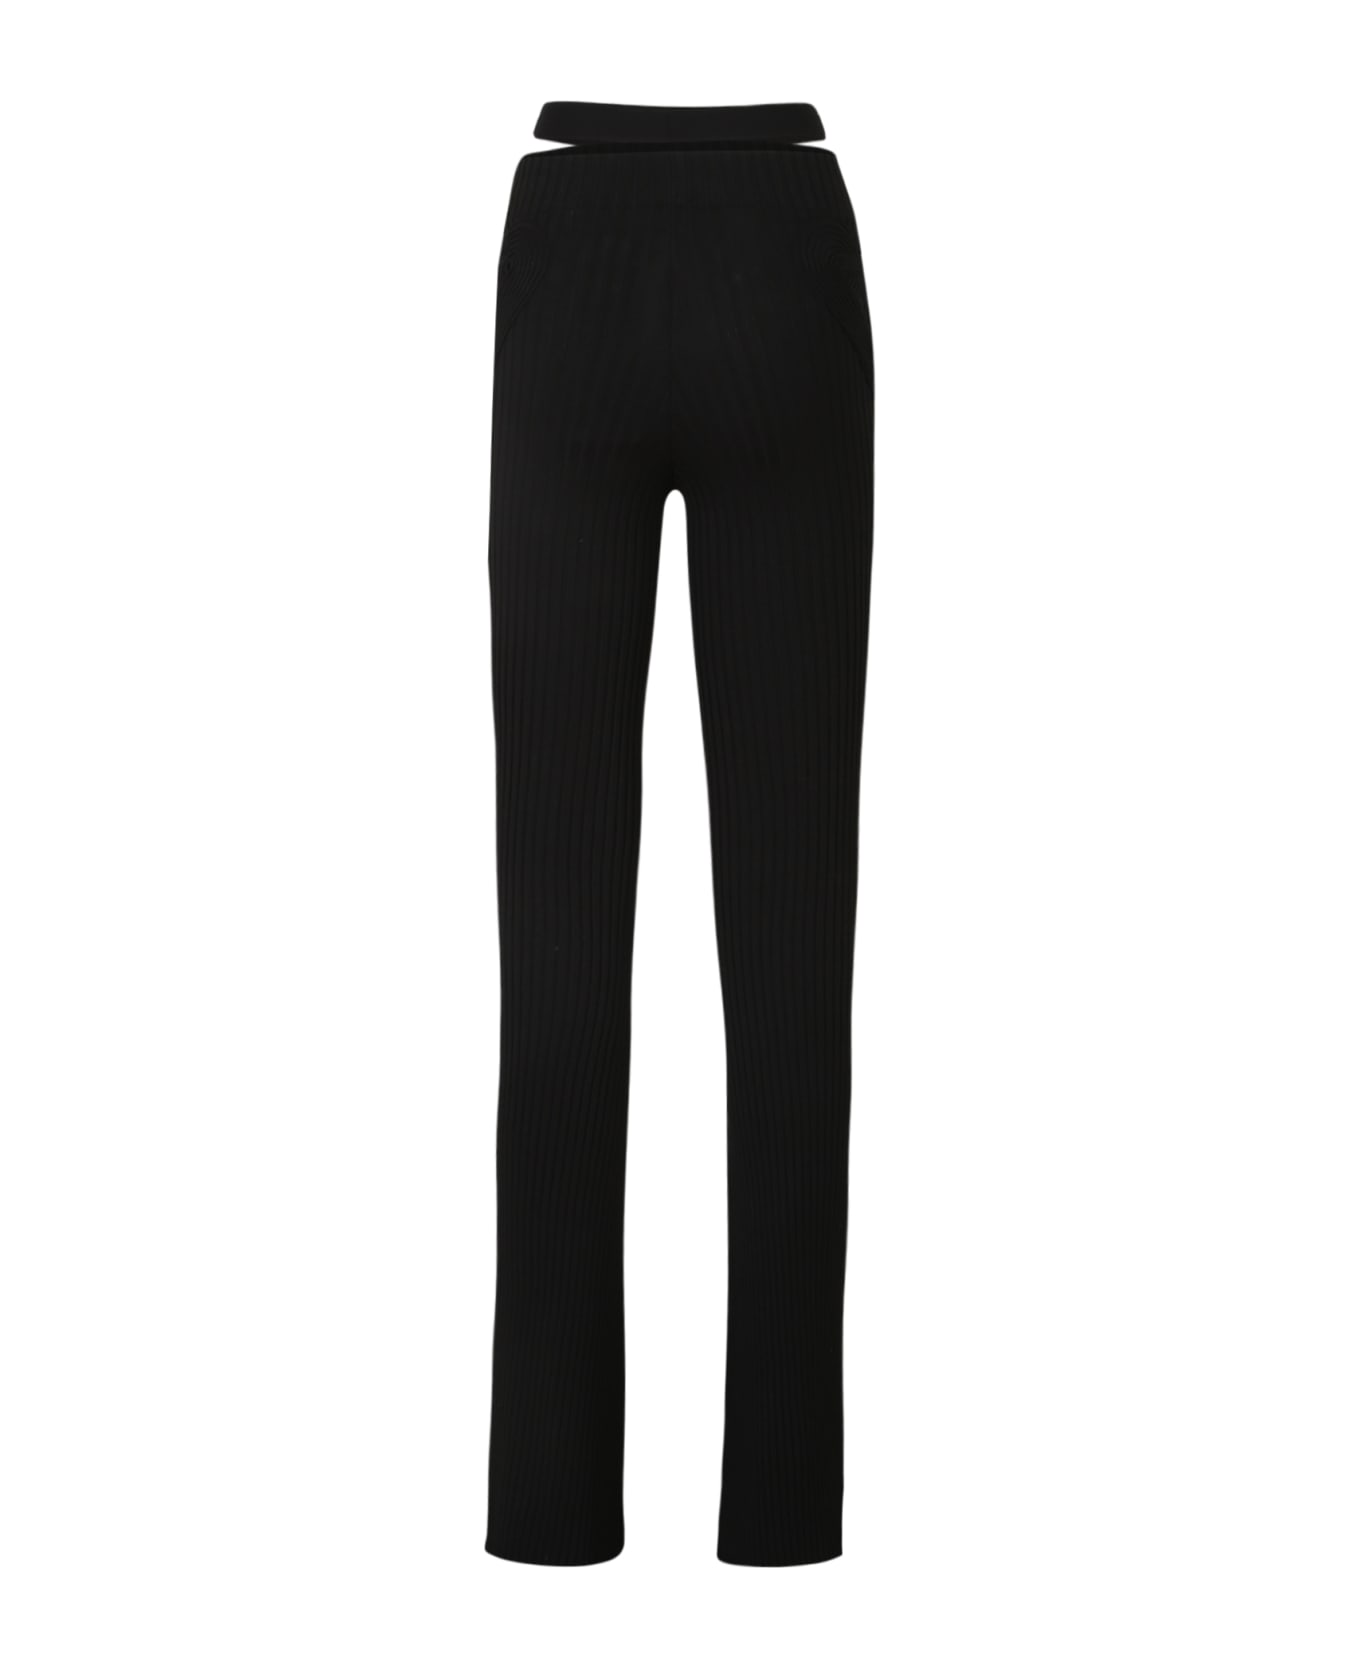 ANDREĀDAMO Ribbed Knit Slim Trousers - Black